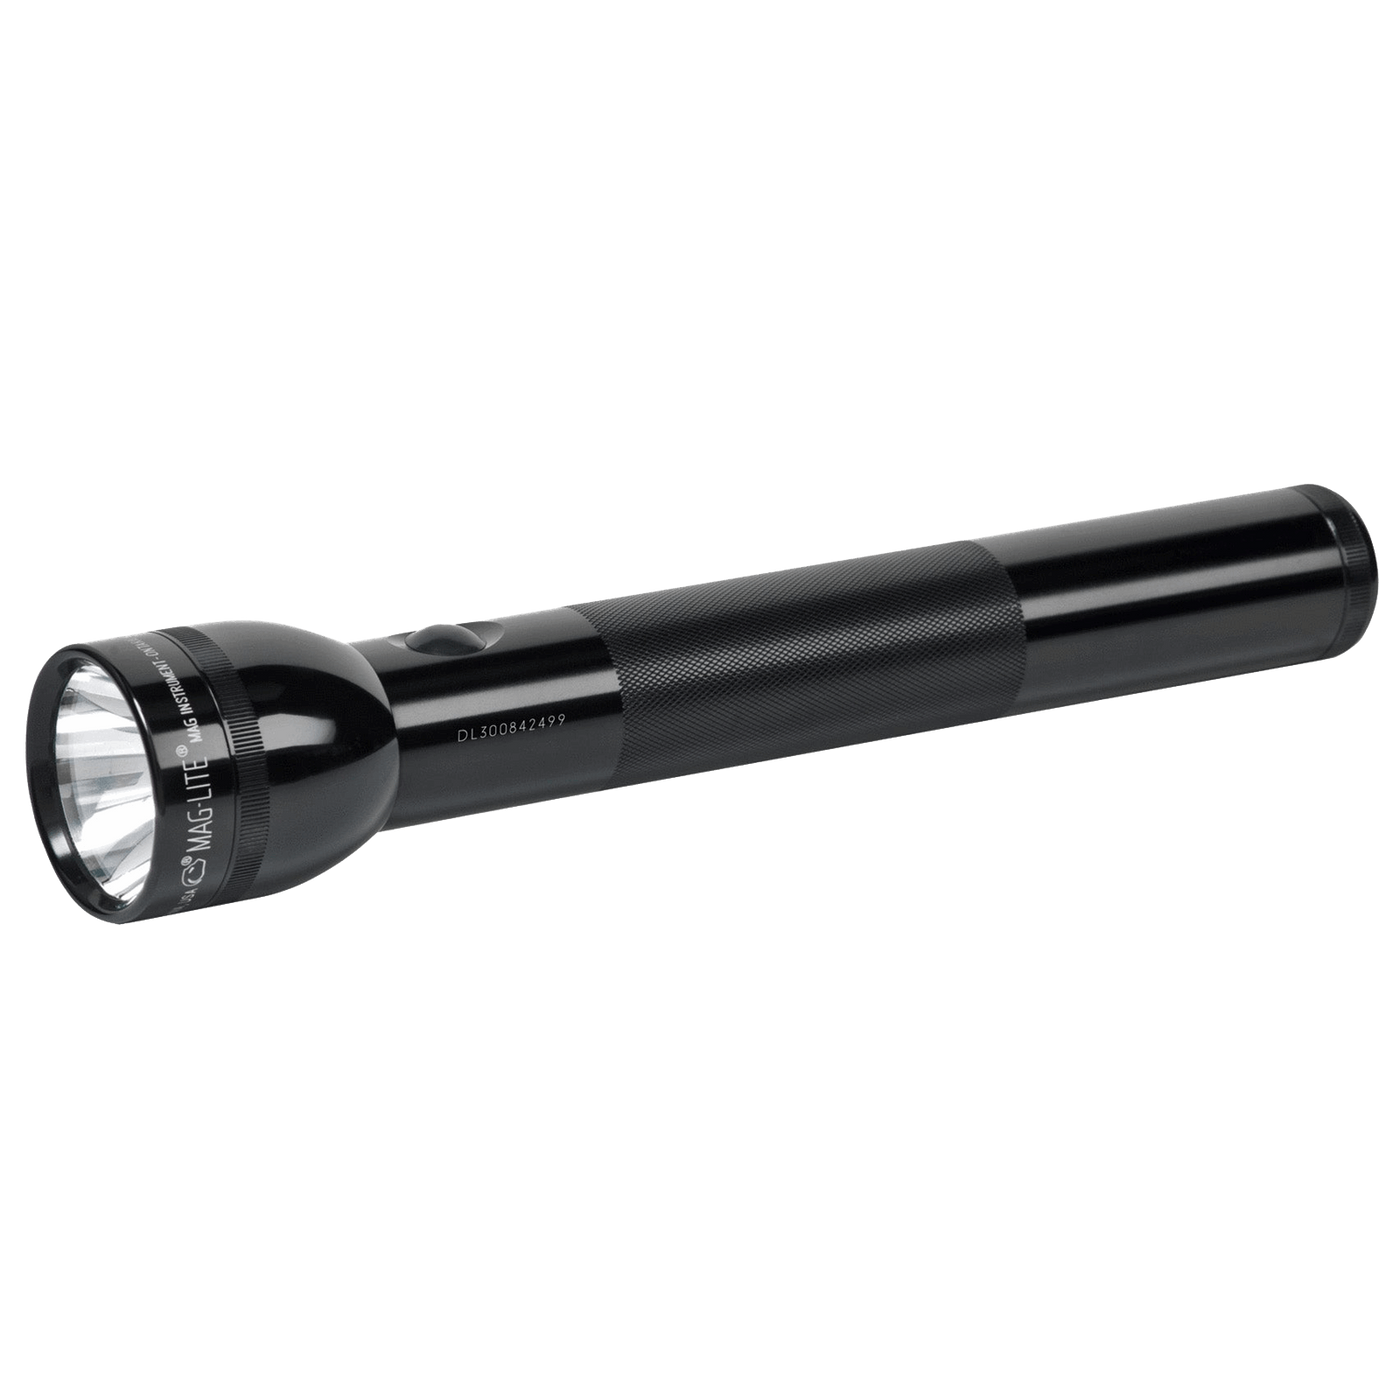 Maglite LED 3-Cell Flashlight in Black